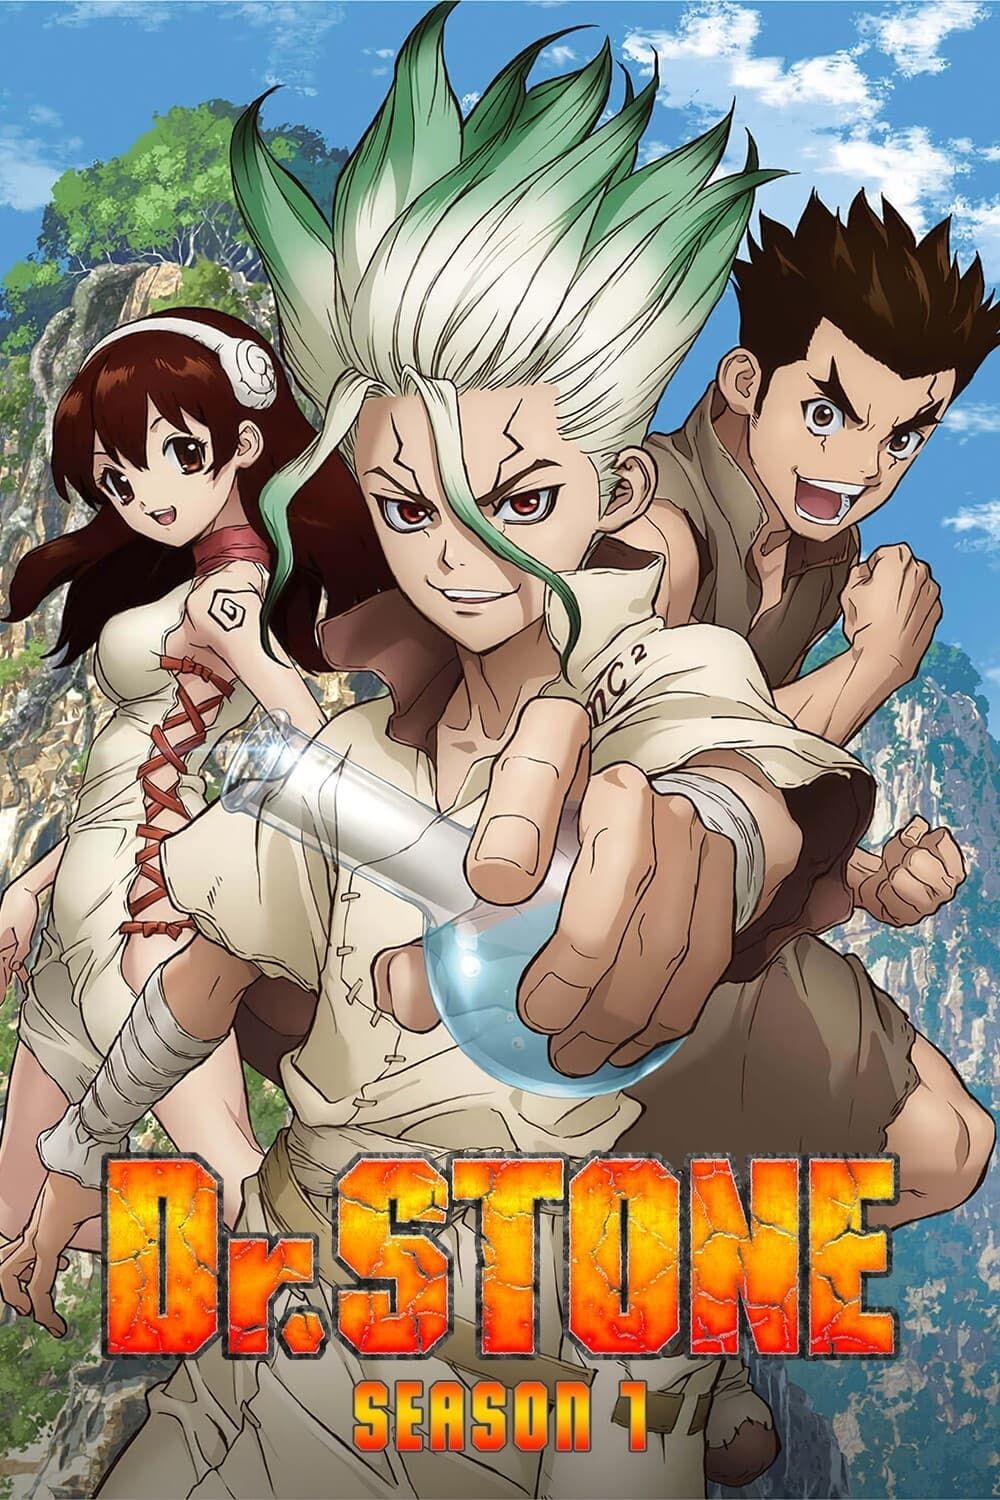 Watch Dr. Stone season 3 episode 7 streaming online